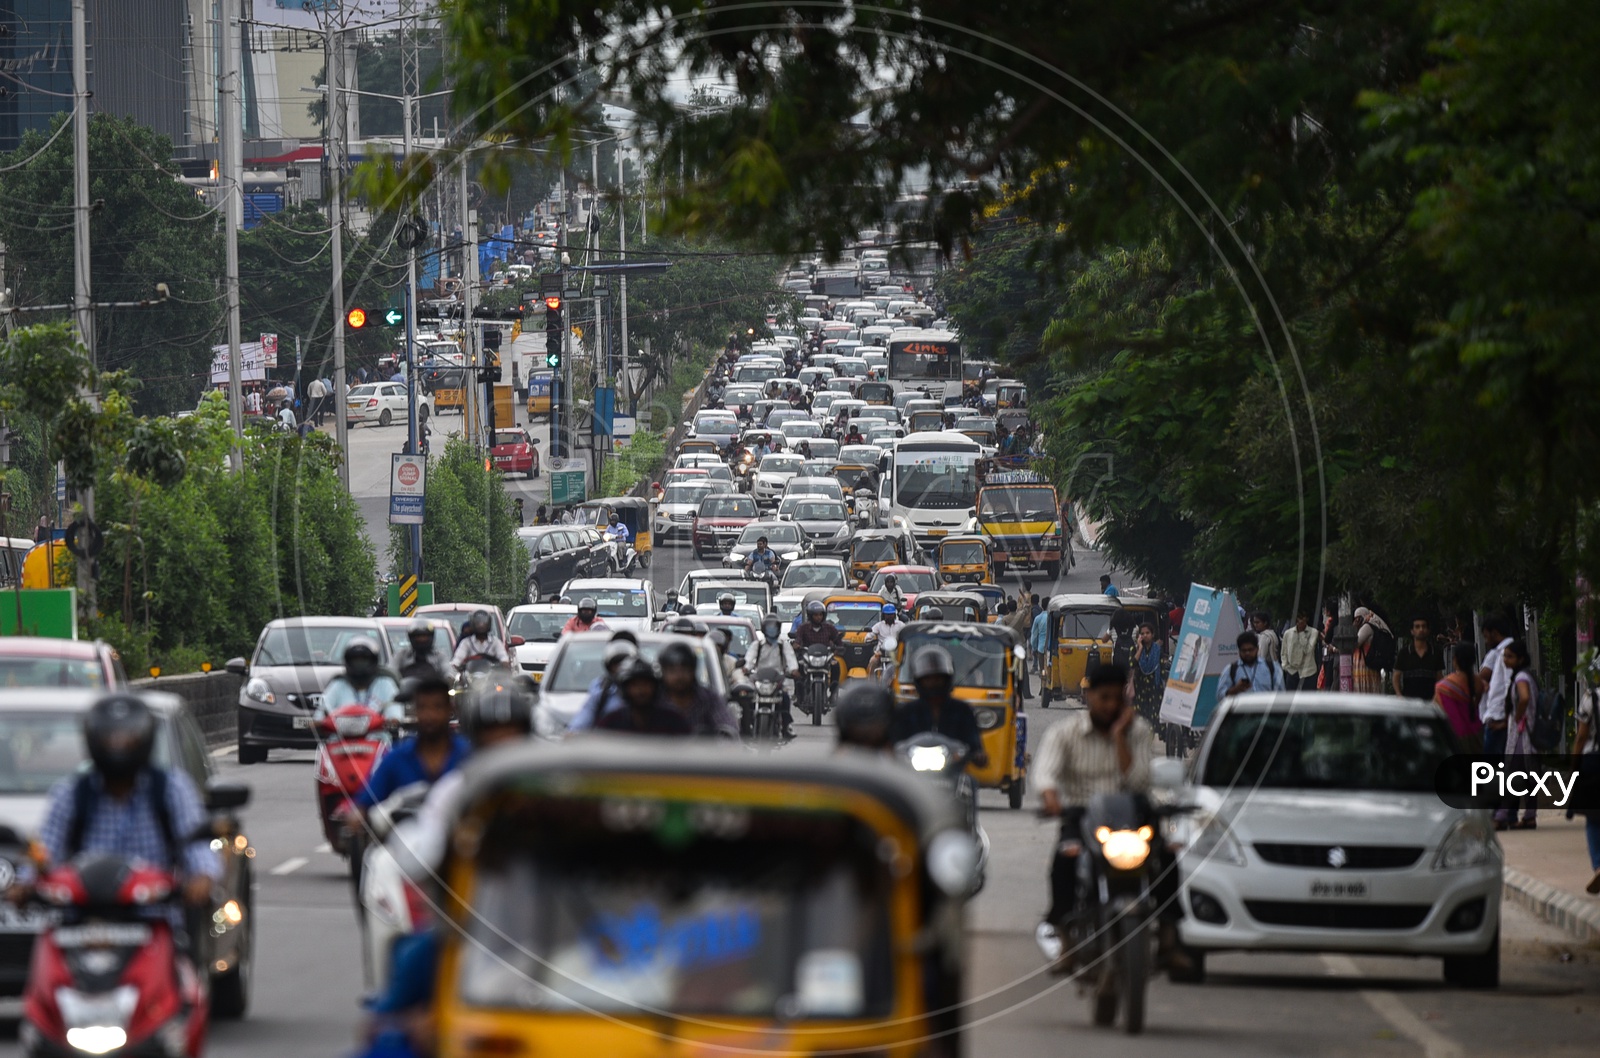 Urban City Roads Full Of Commuting Vehicles